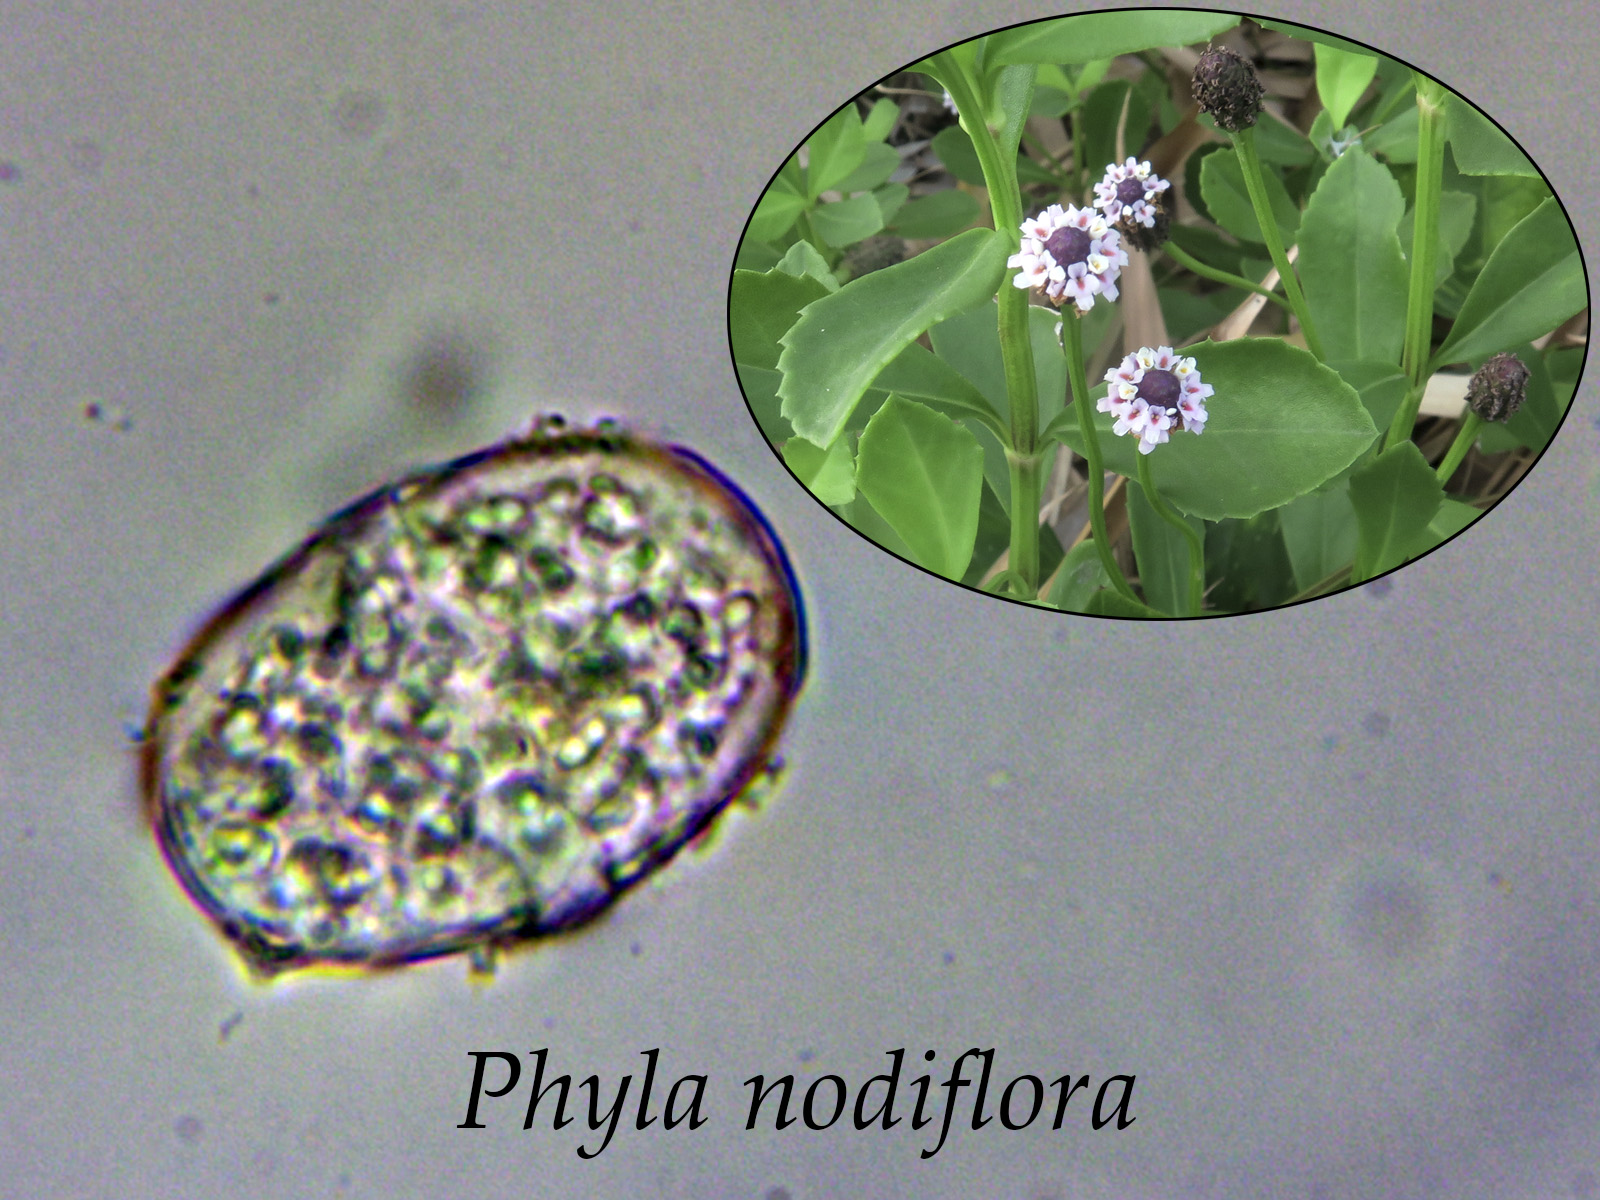 Phylanodiflora.jpg